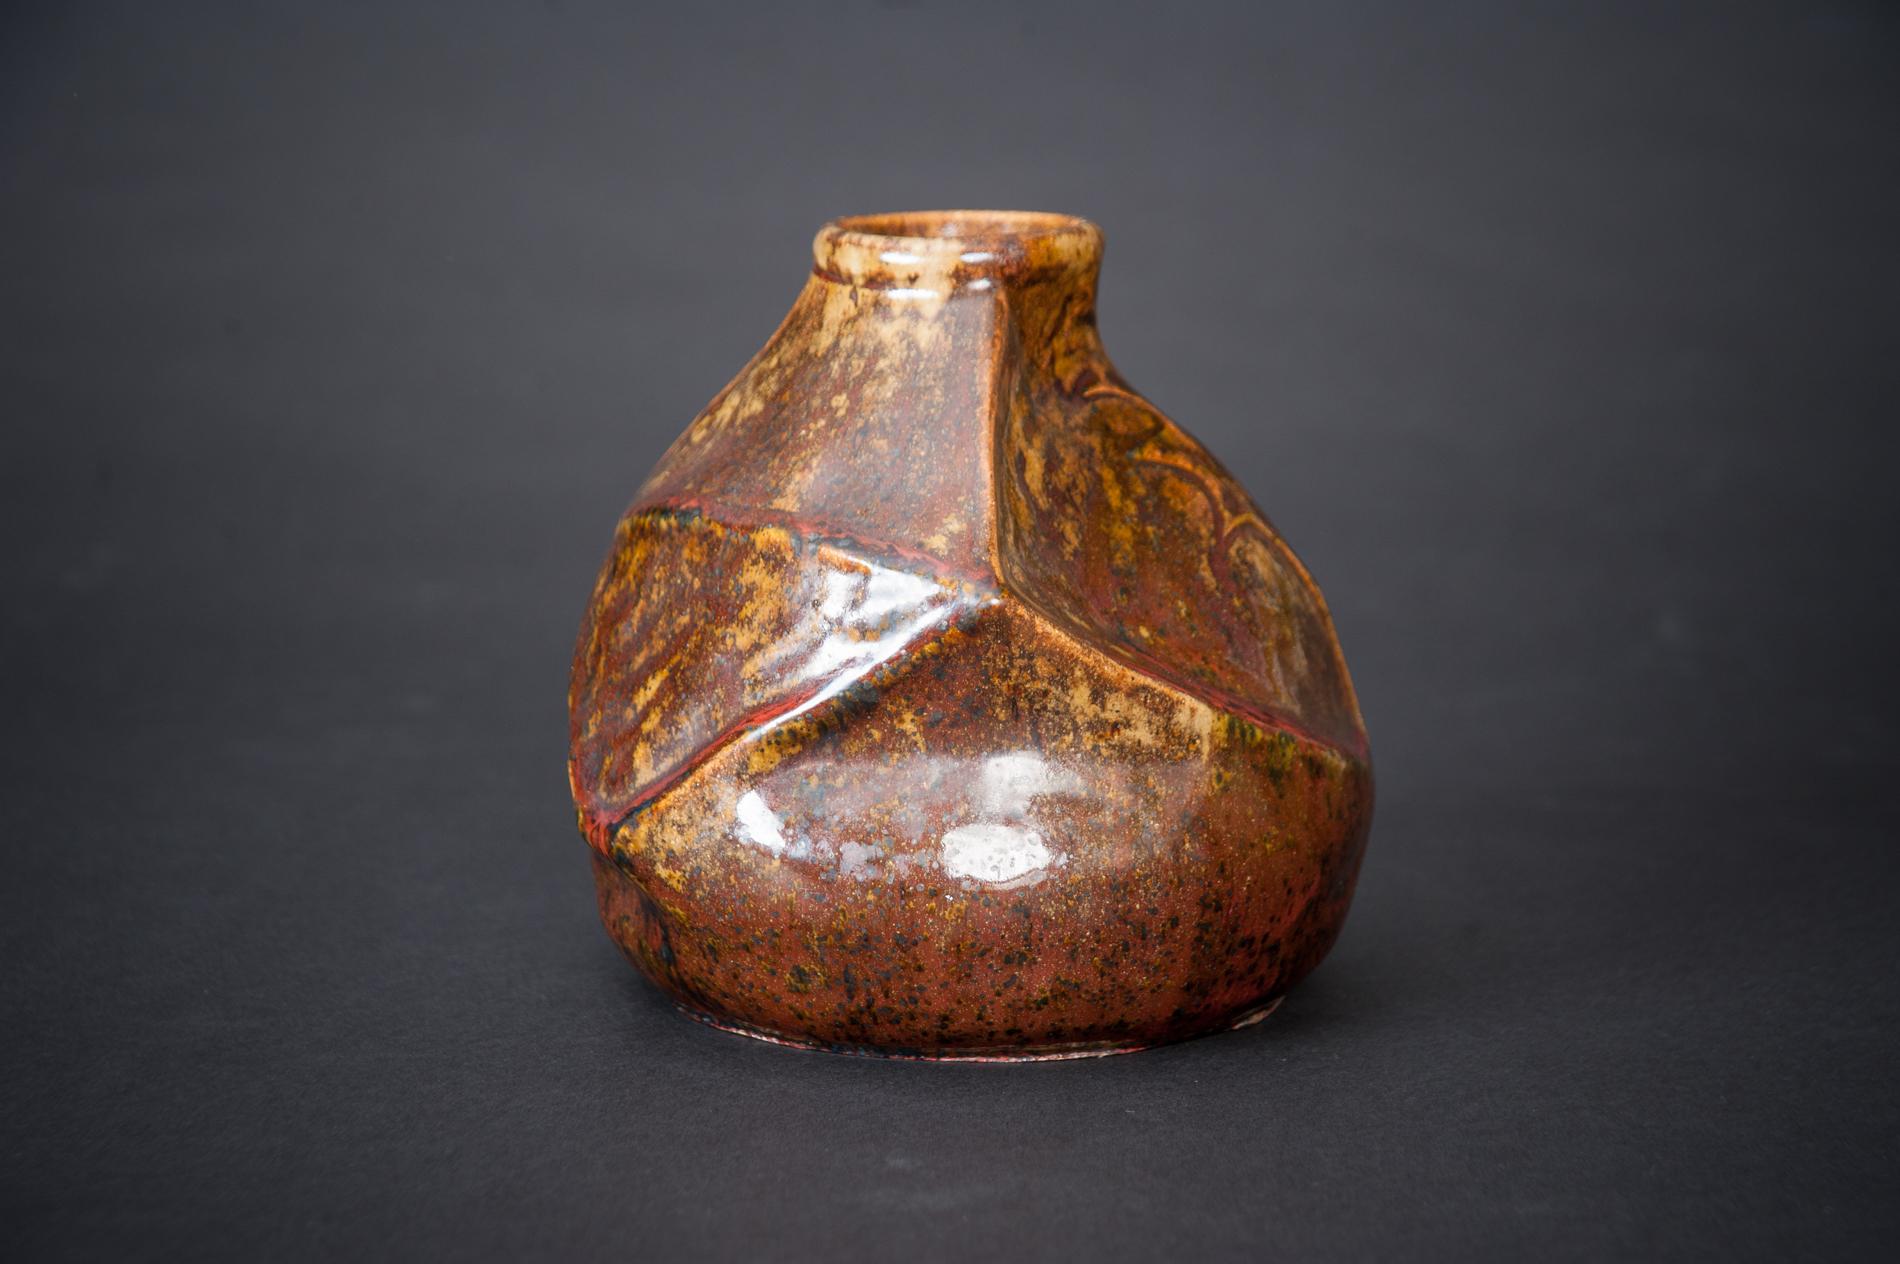 asymmetrical vases